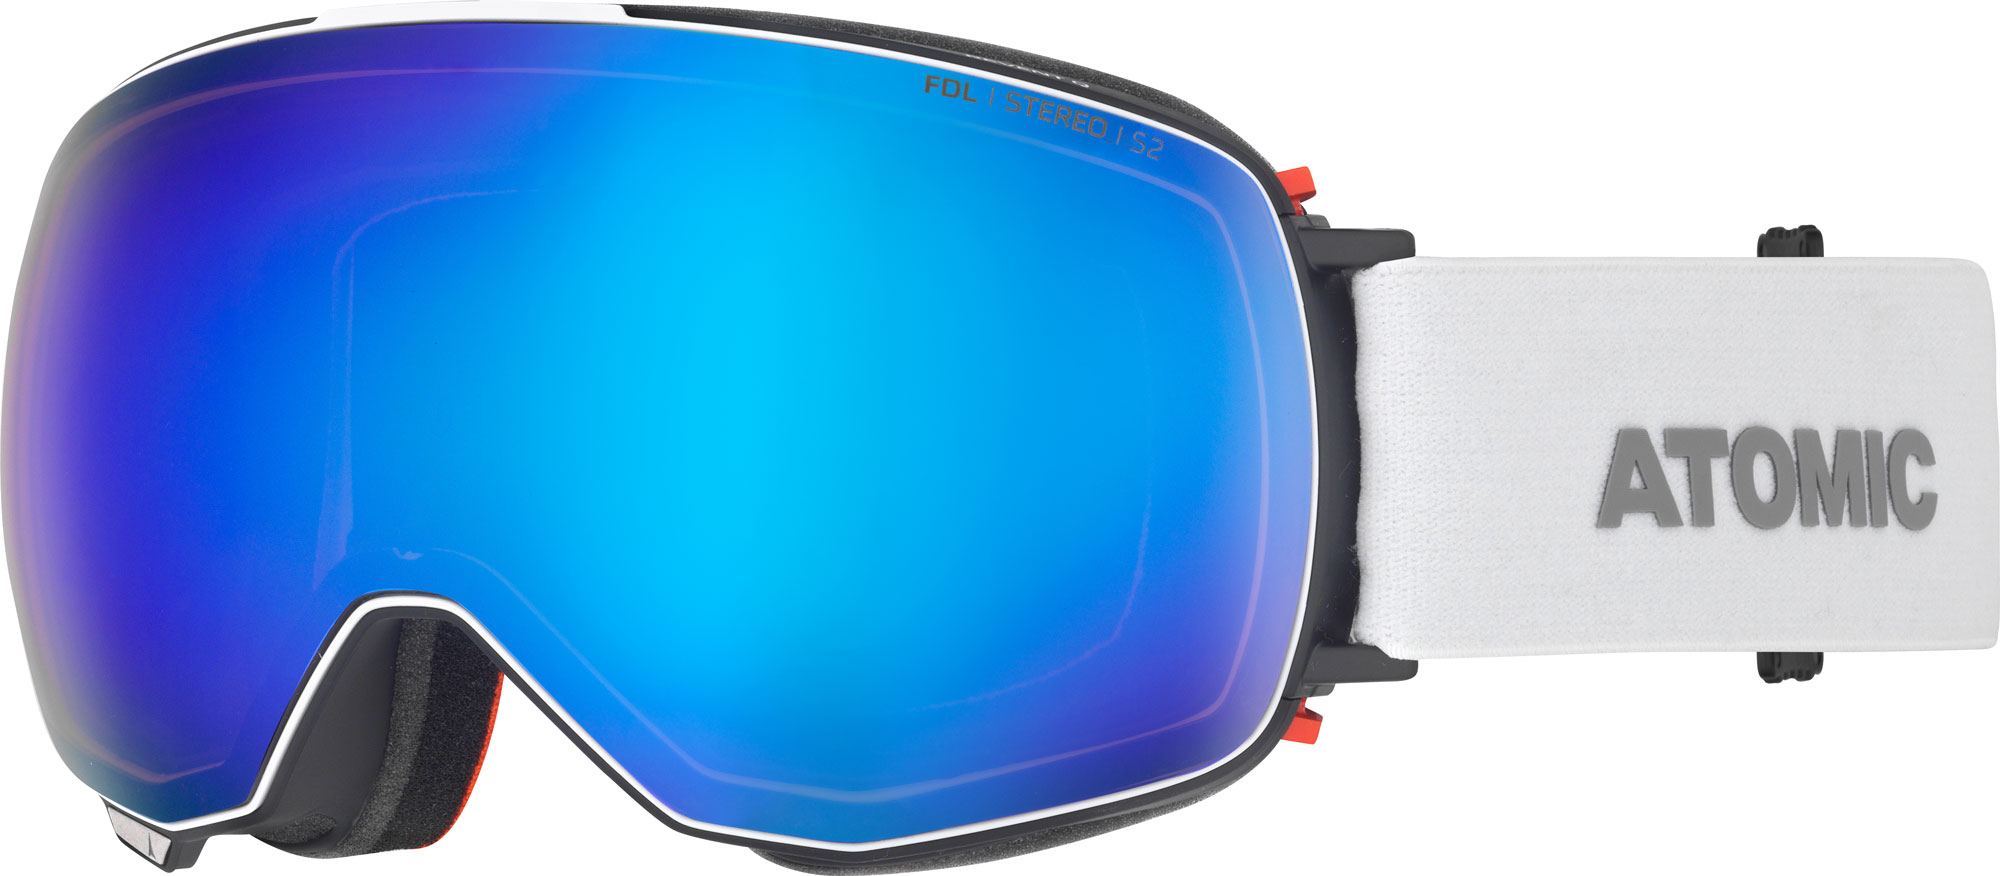 Unisex lyžařské brýle